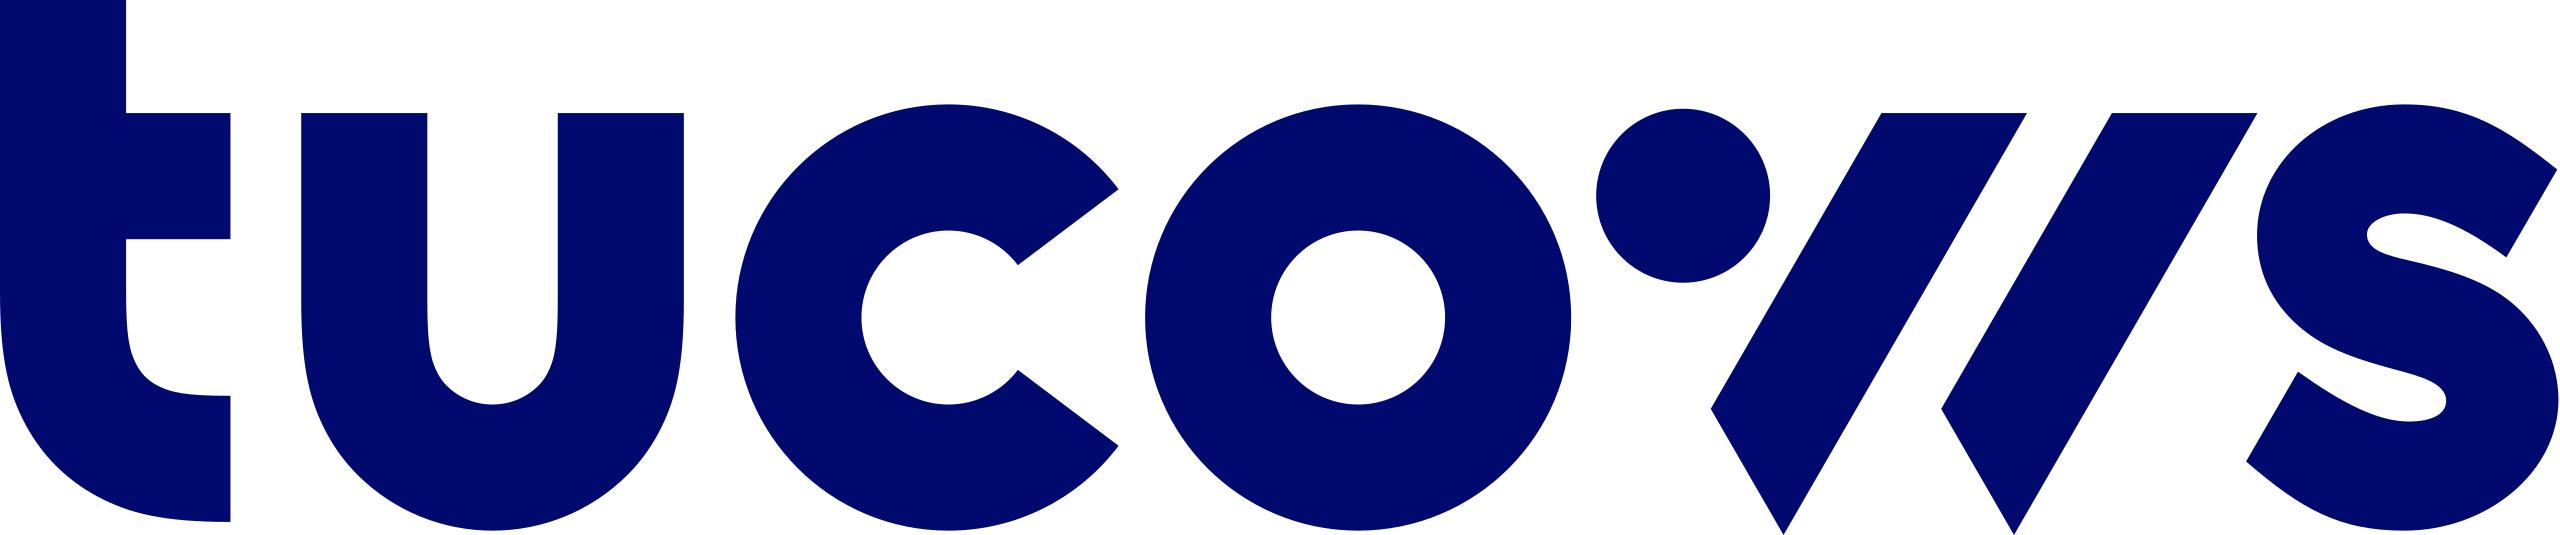 Tucows logo.svg.png